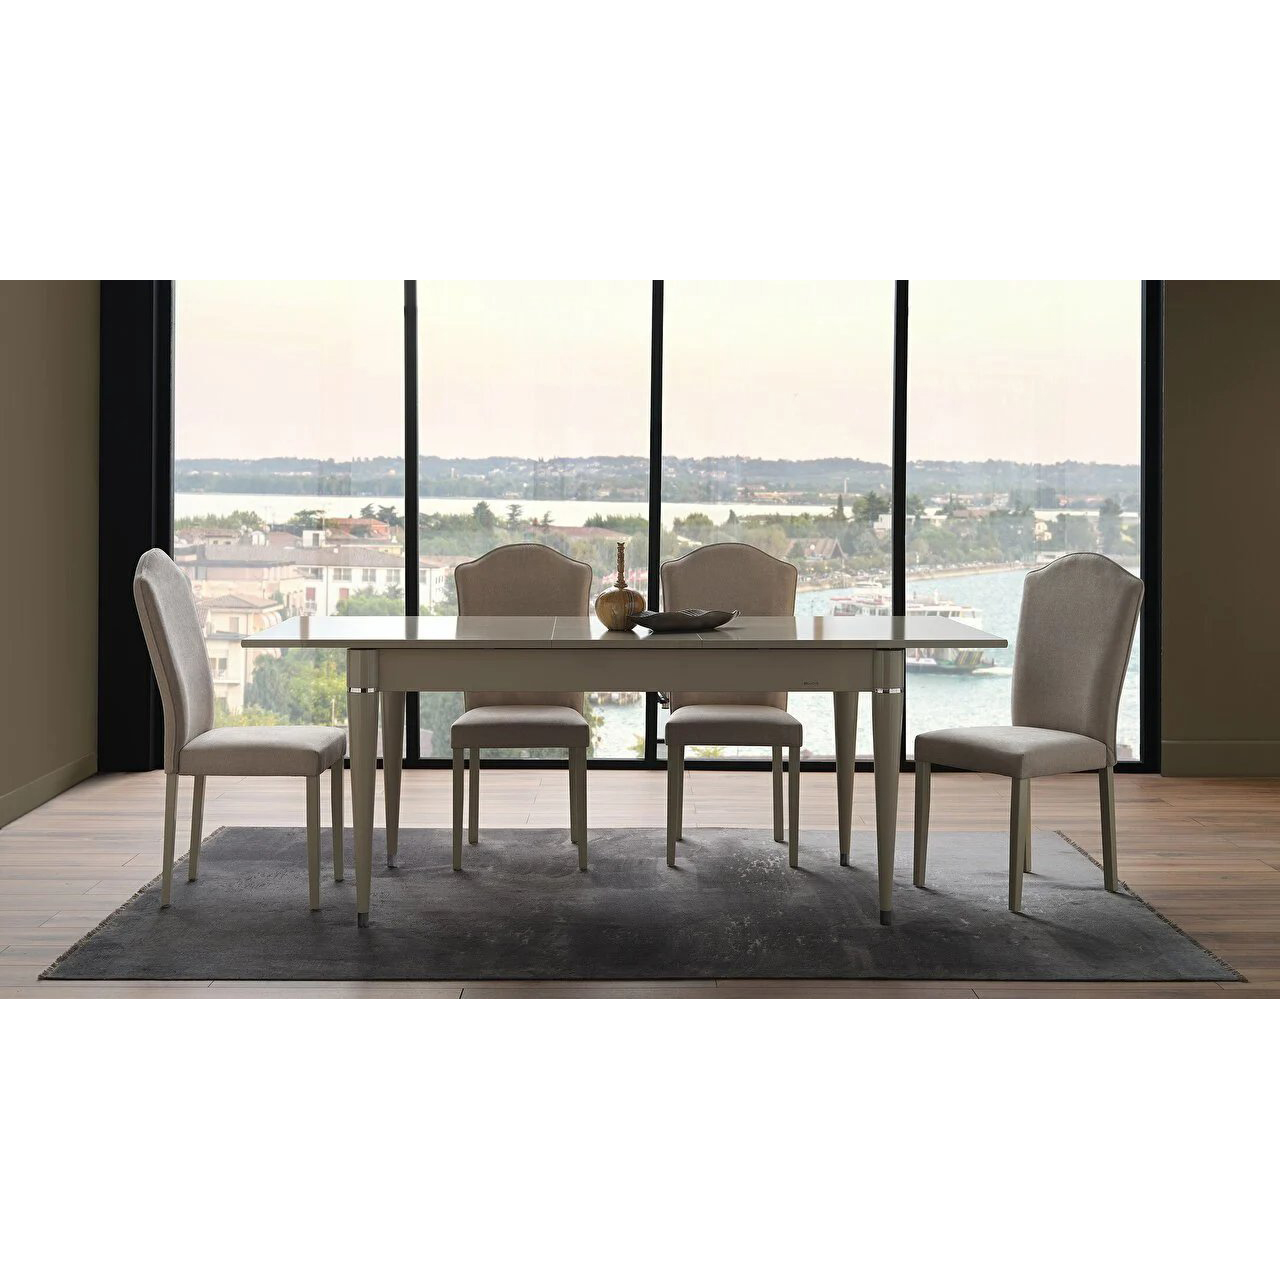 Стол обеденный Bellona Marsilya, раскладной, размер 164(204)x90x77 см (MRSL-14F)MRSL-14F